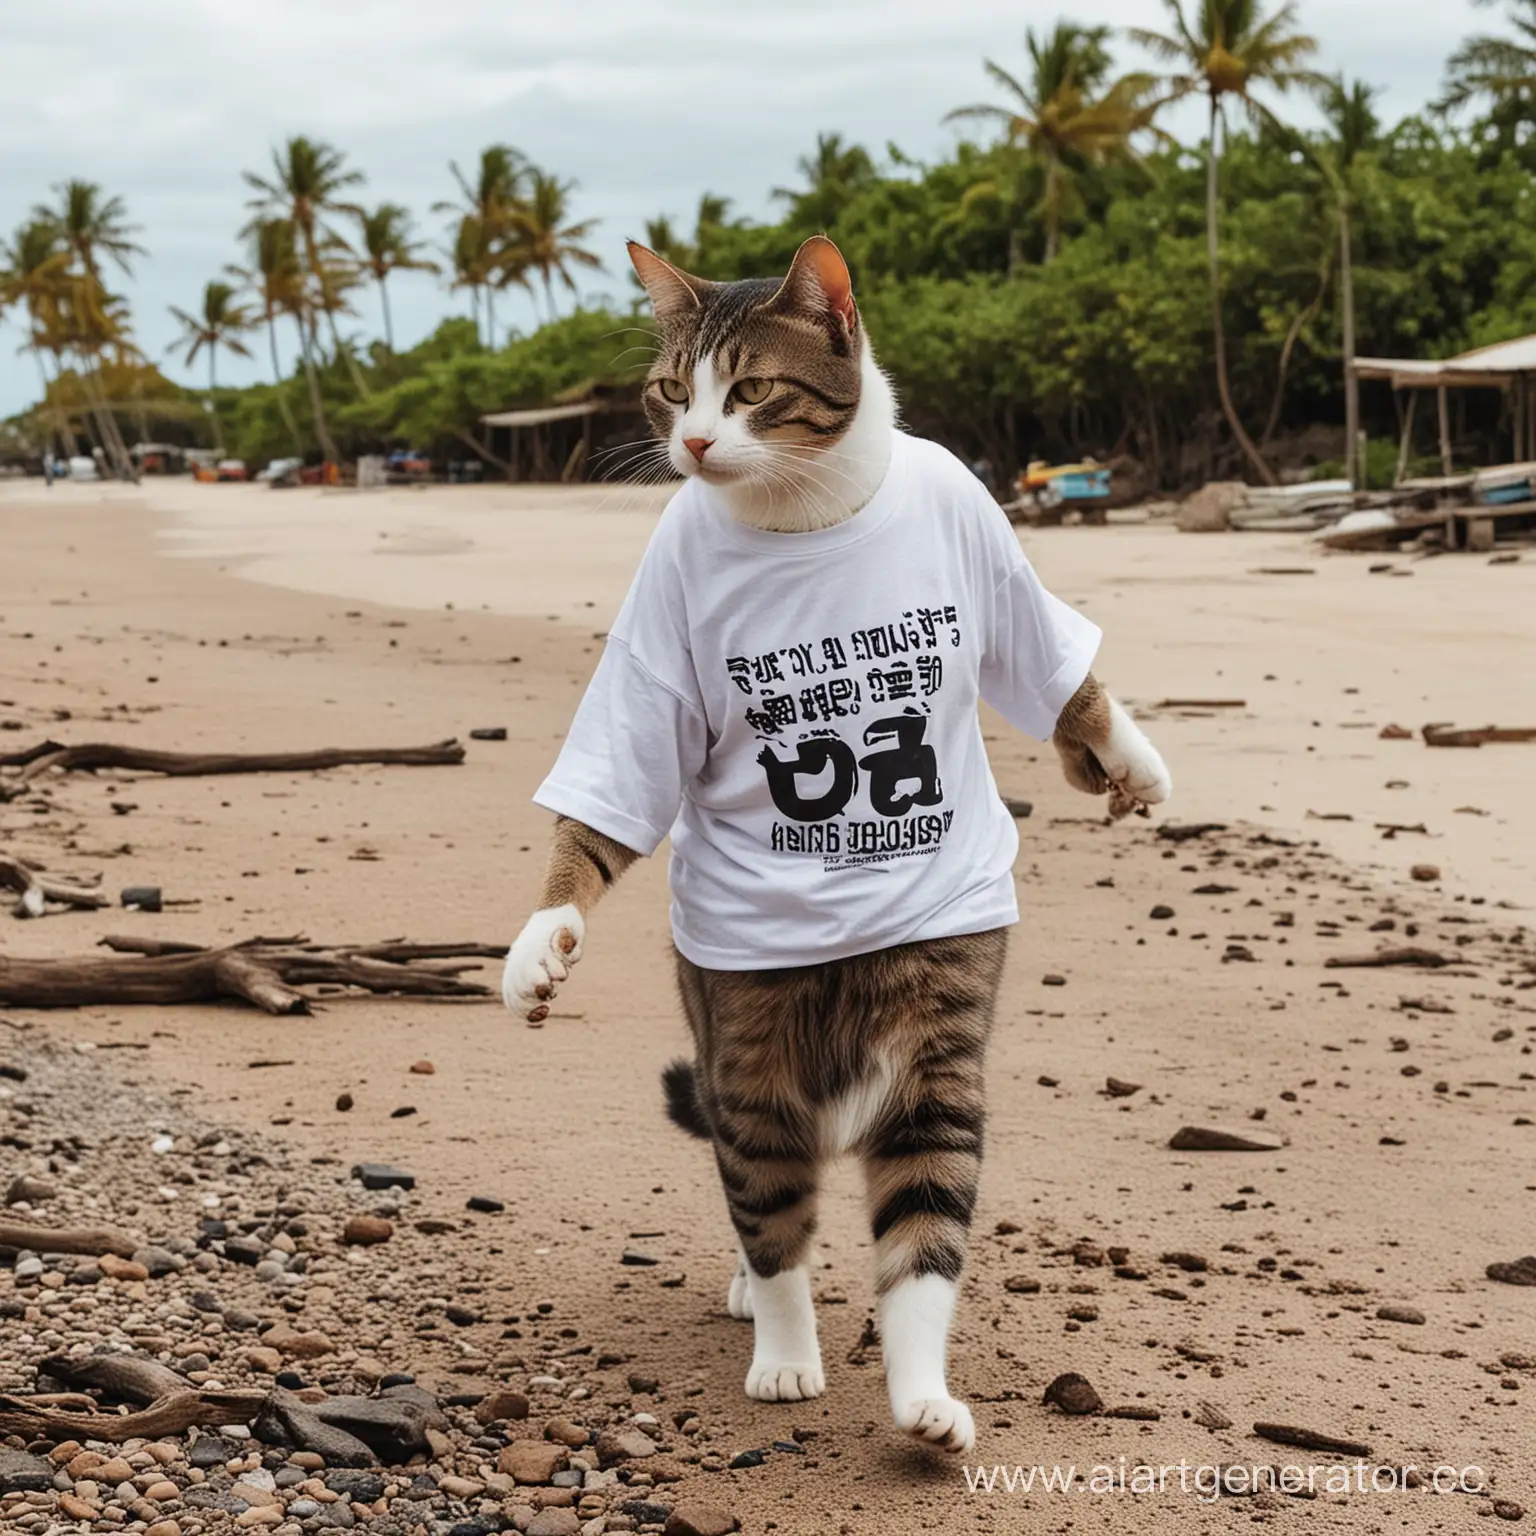 Cat-Wearing-TShirt-Strolling-on-Tropical-Island